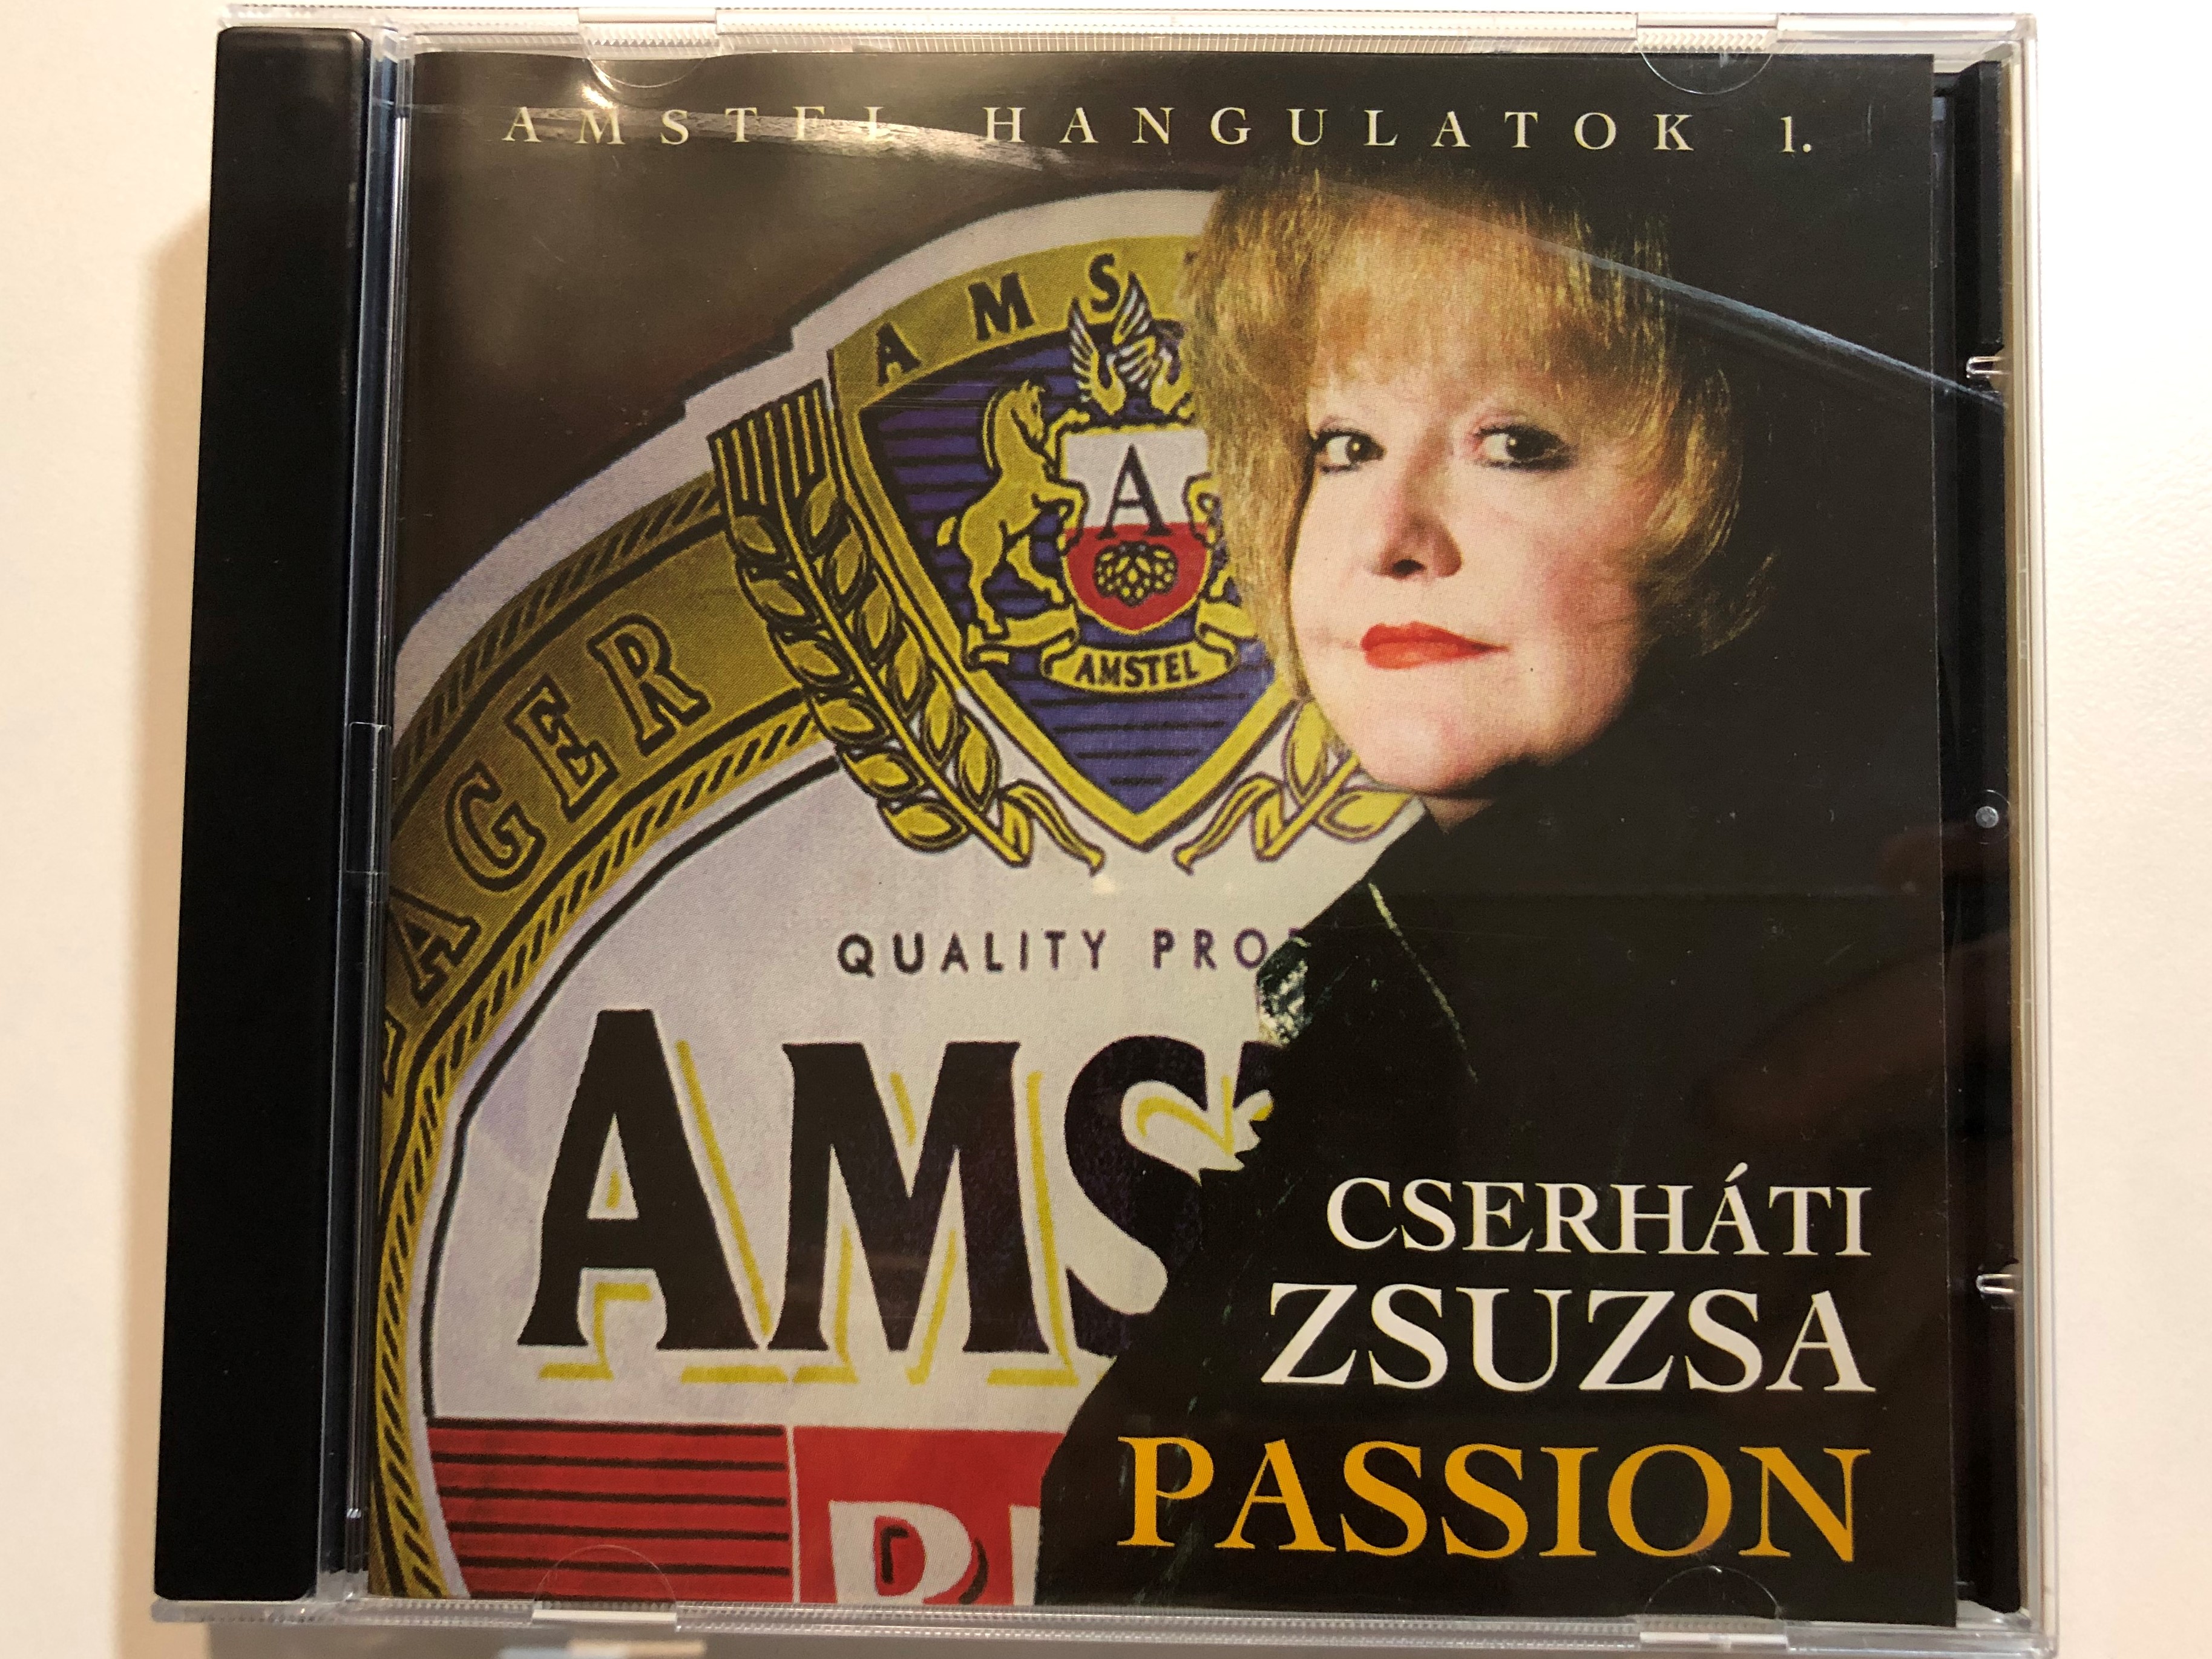 cserh-ti-zsuzsa-passion-amstel-hangulatok-i.-r-zsa-records-audio-cd-1997-rprcd-0001-1-.jpg